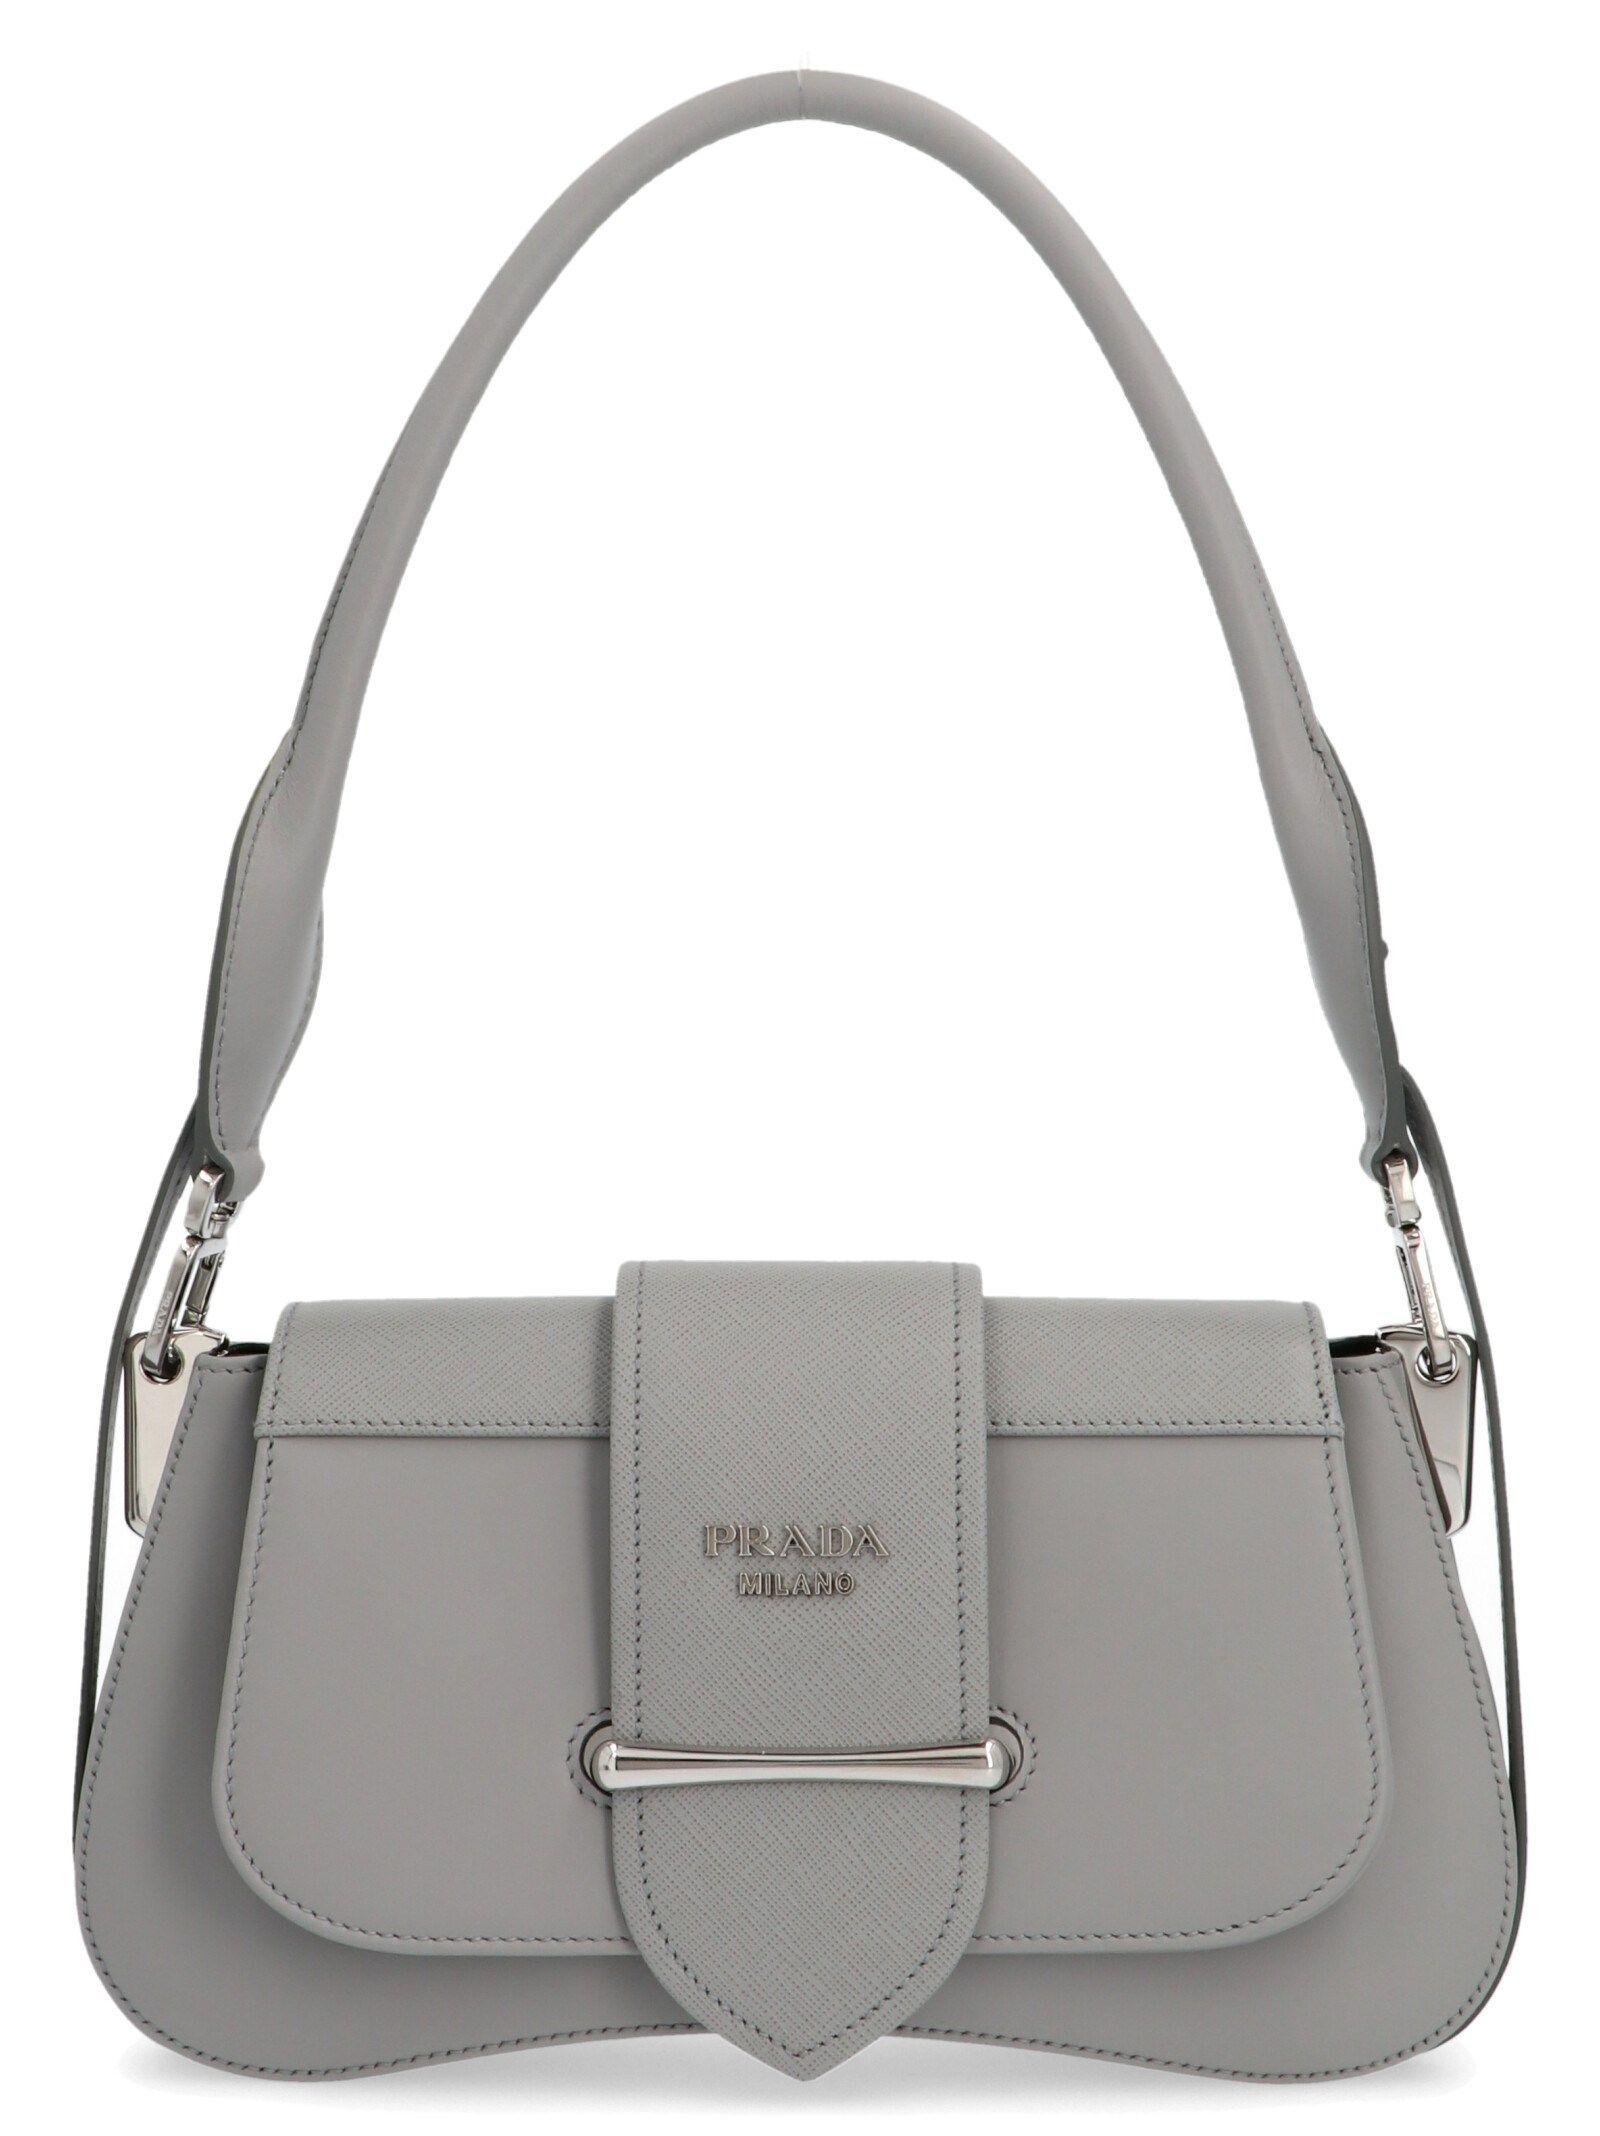 Prada Leather Handbag in Grey (Gray) - Lyst